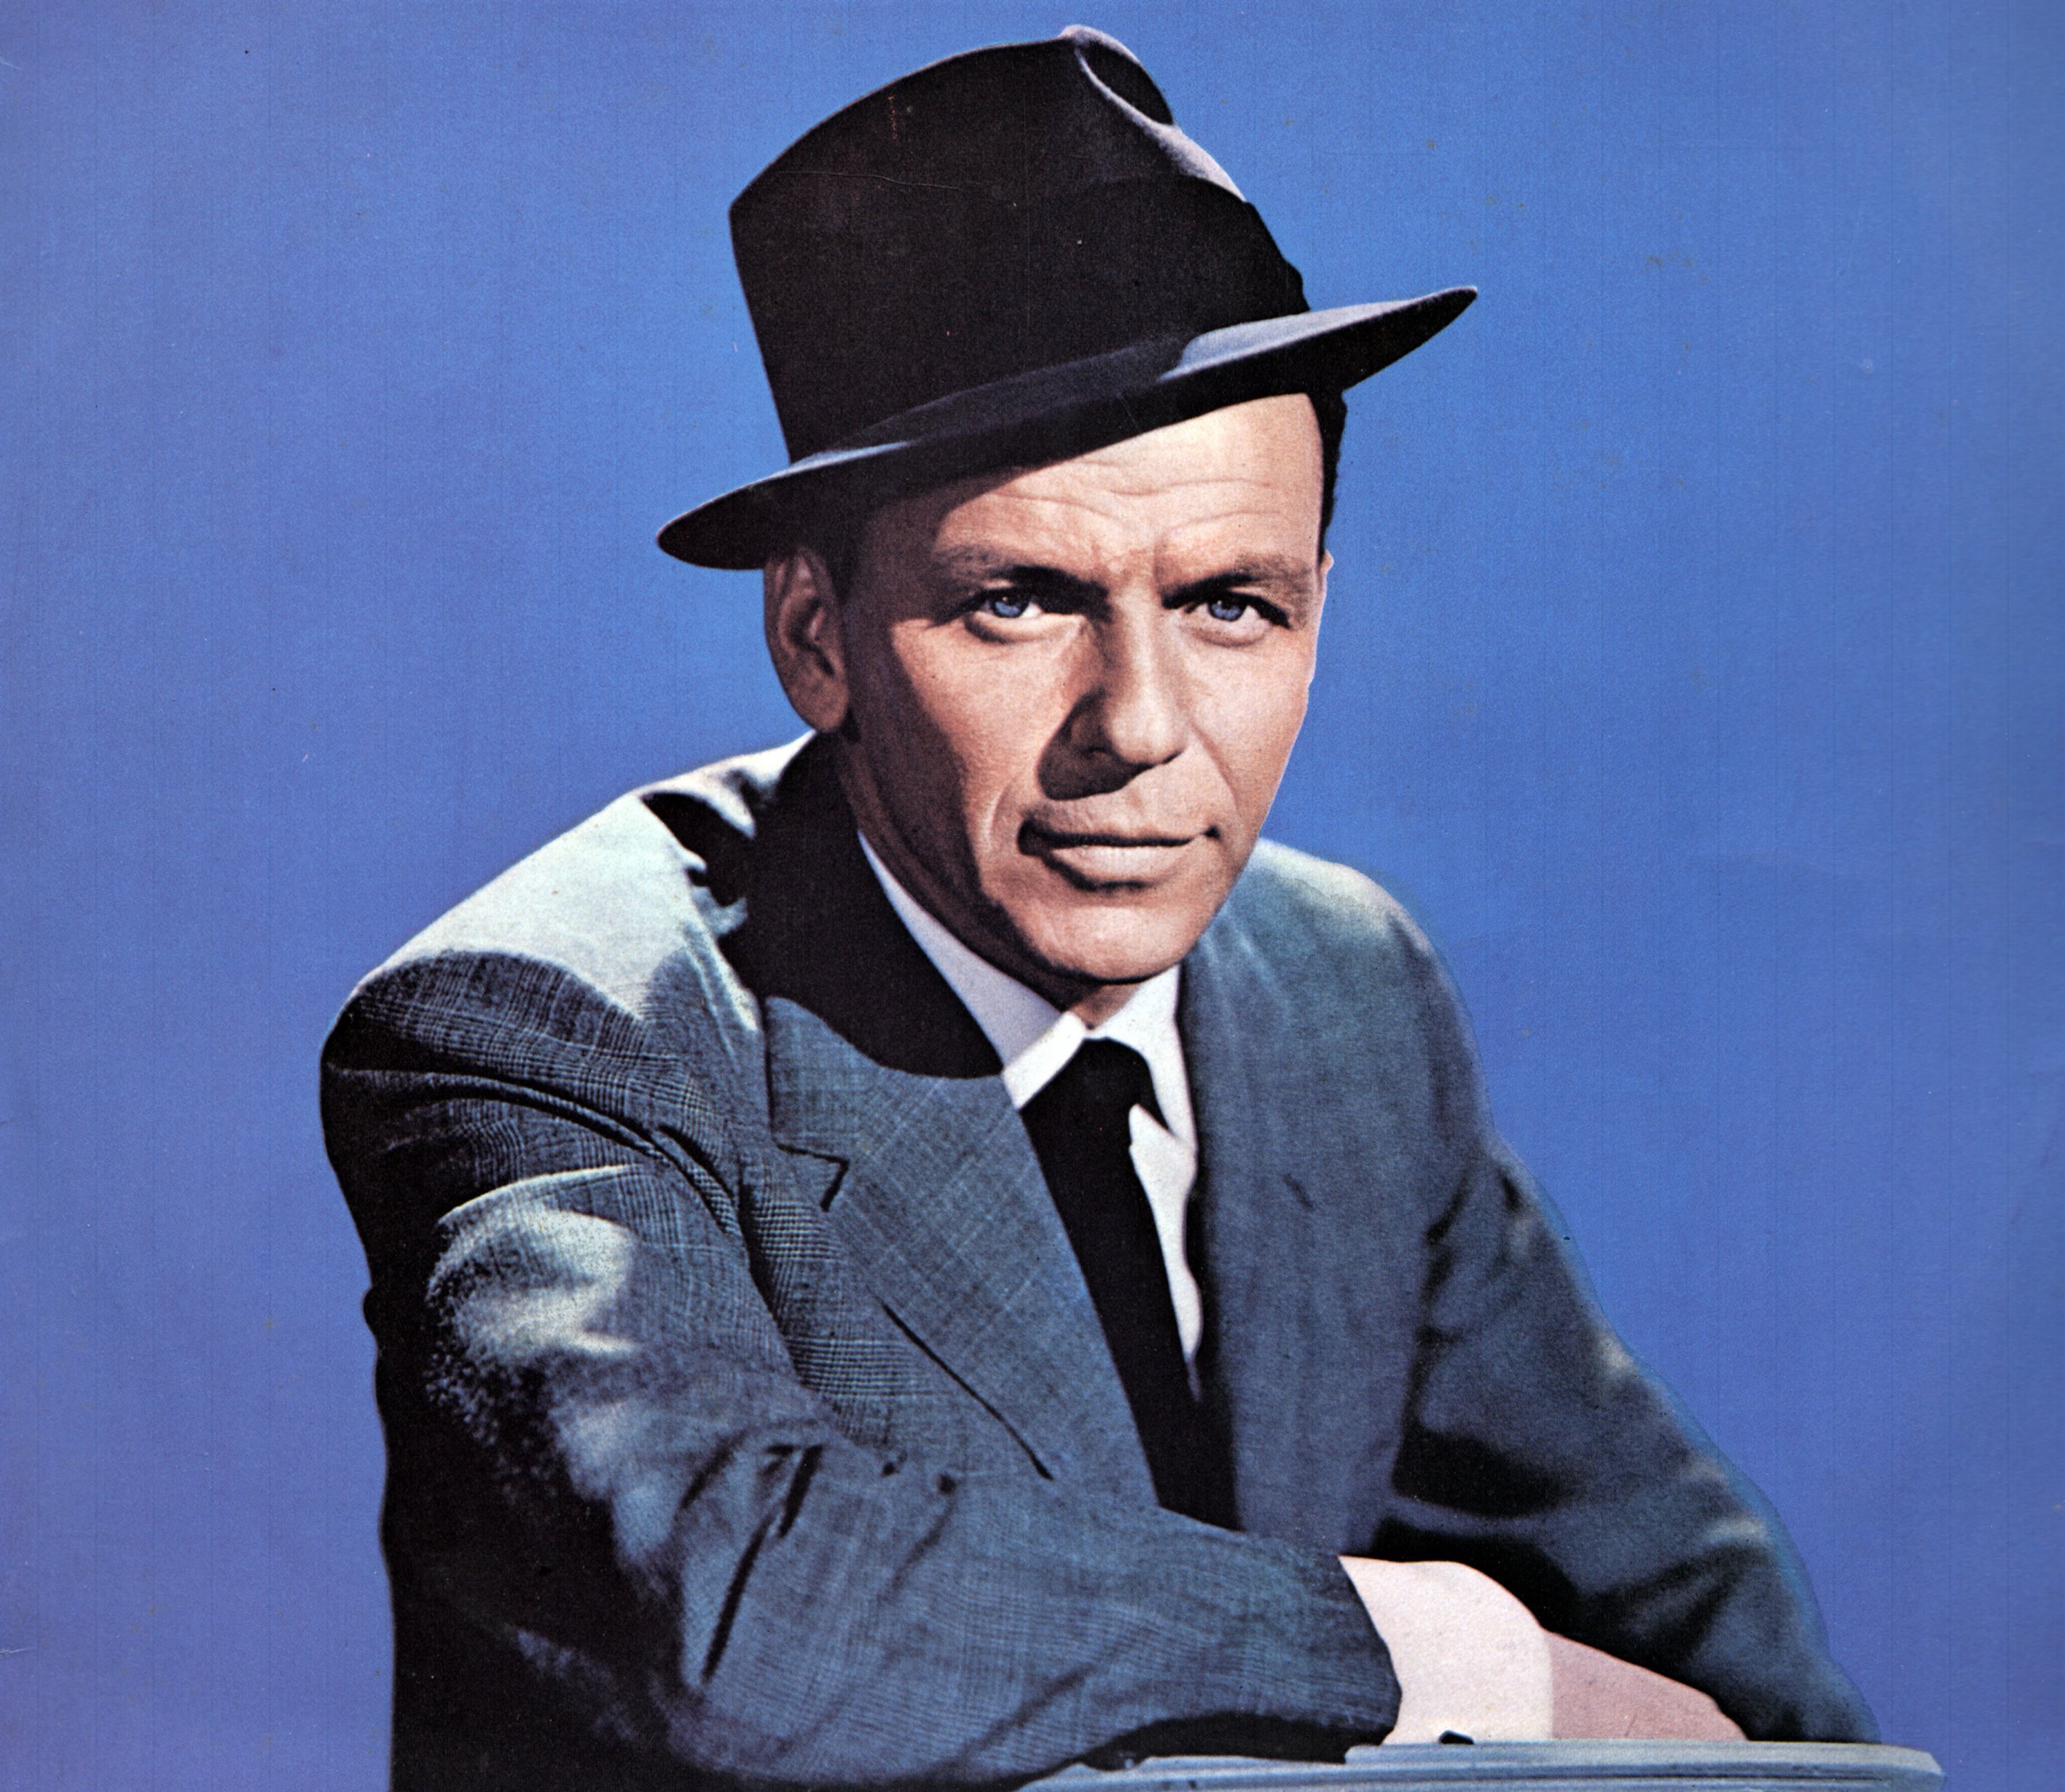 Frank Sinatra wearing a fedora